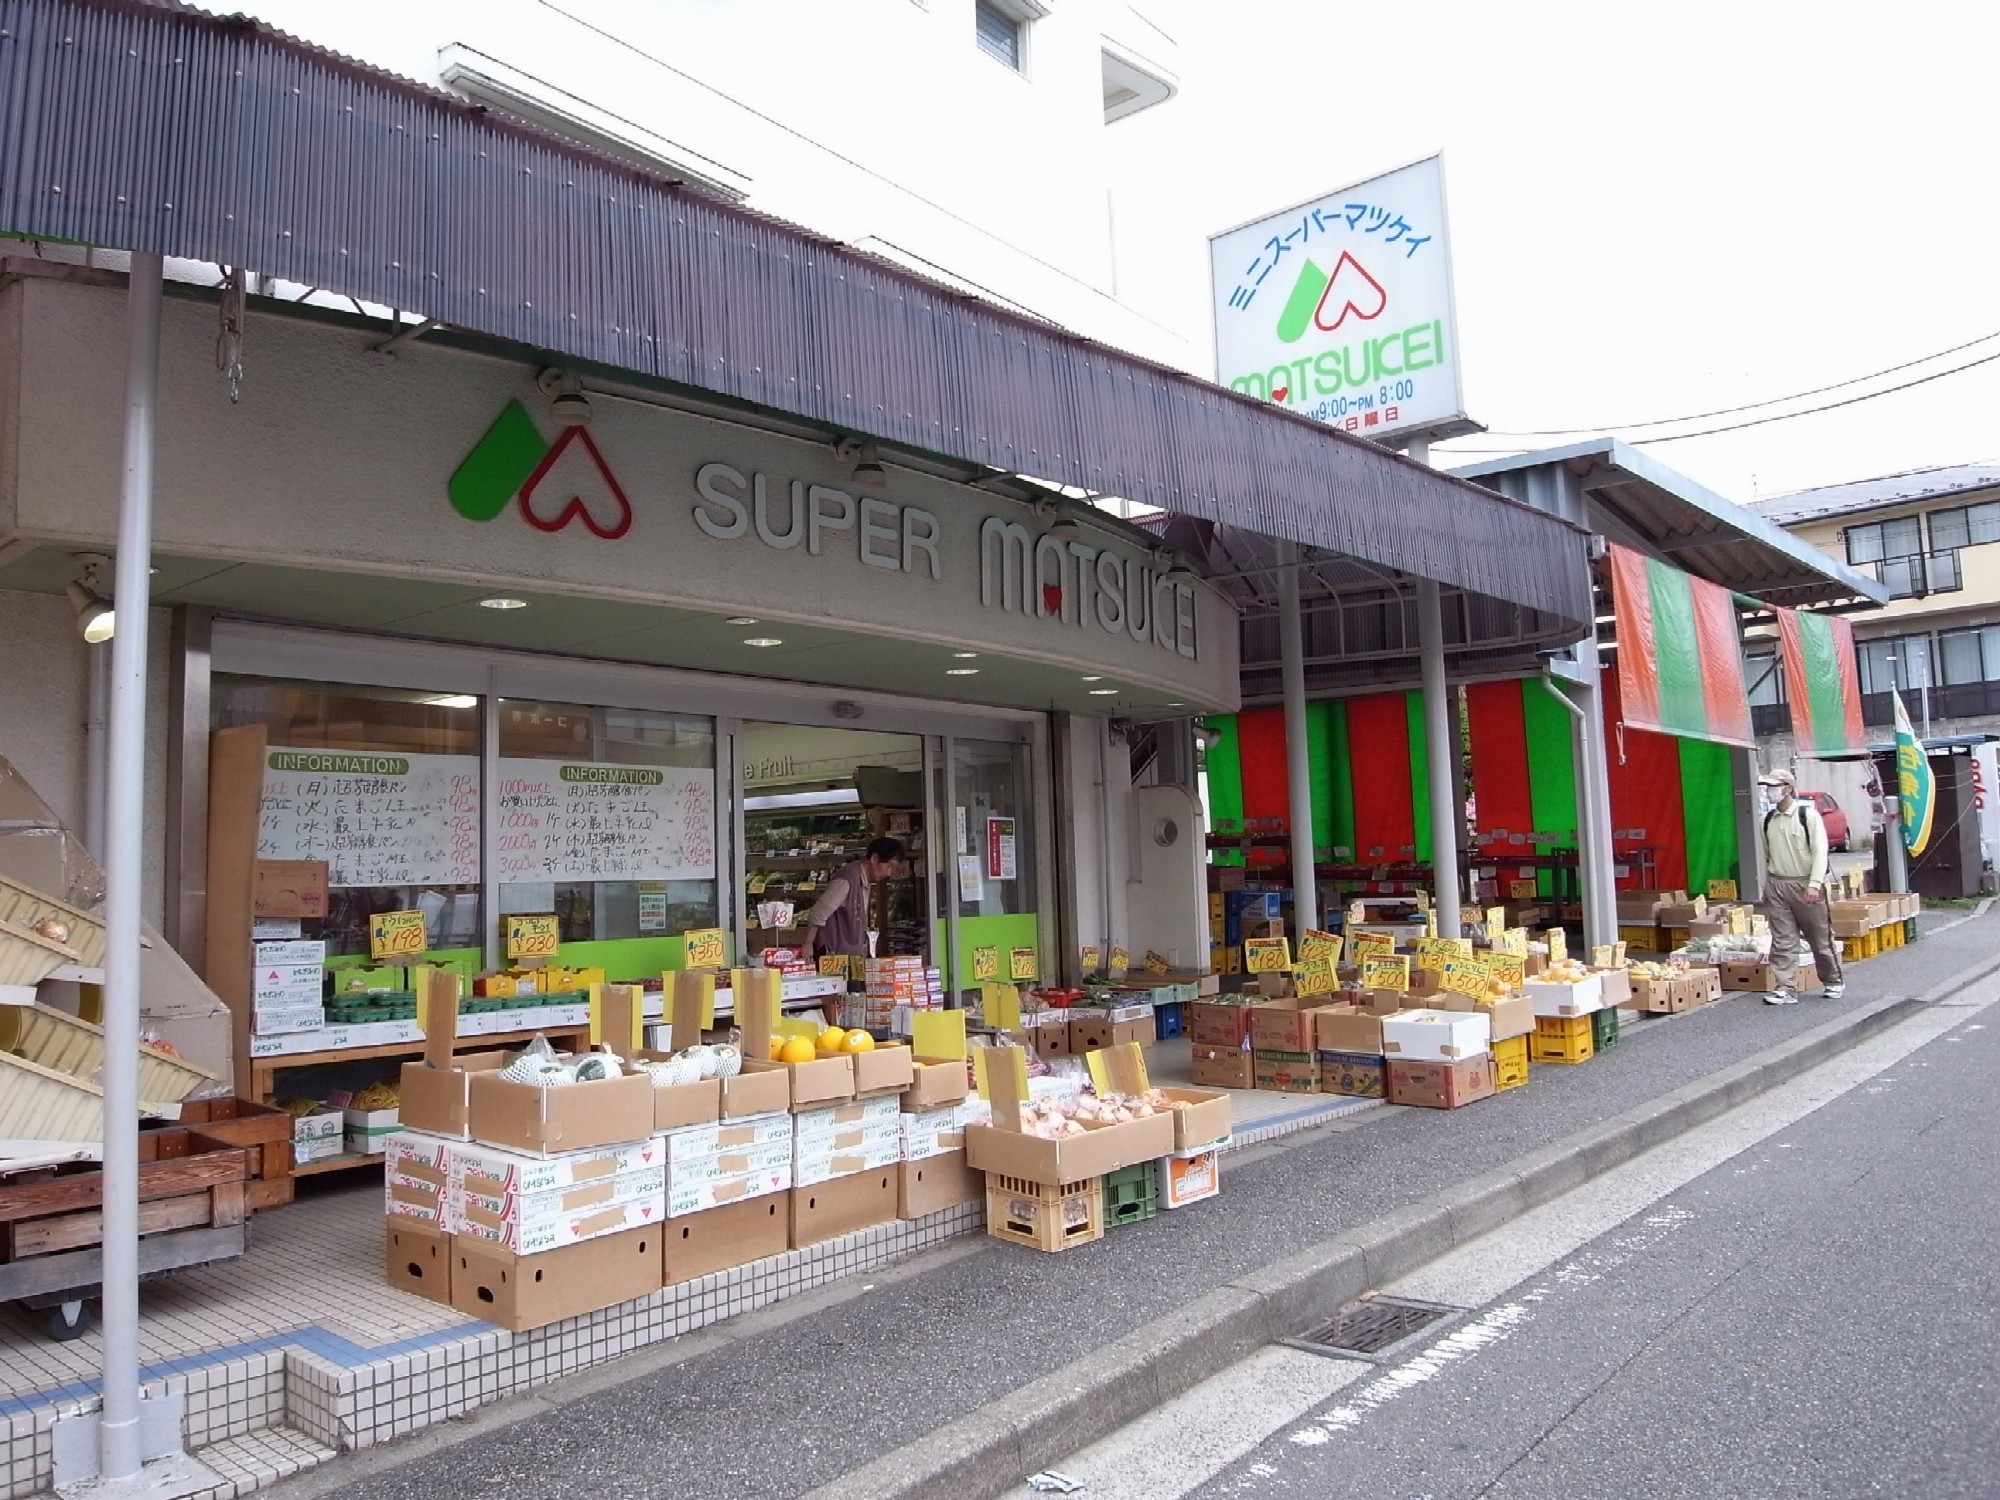 Supermarket. MatsuKei 50m until the super (super)